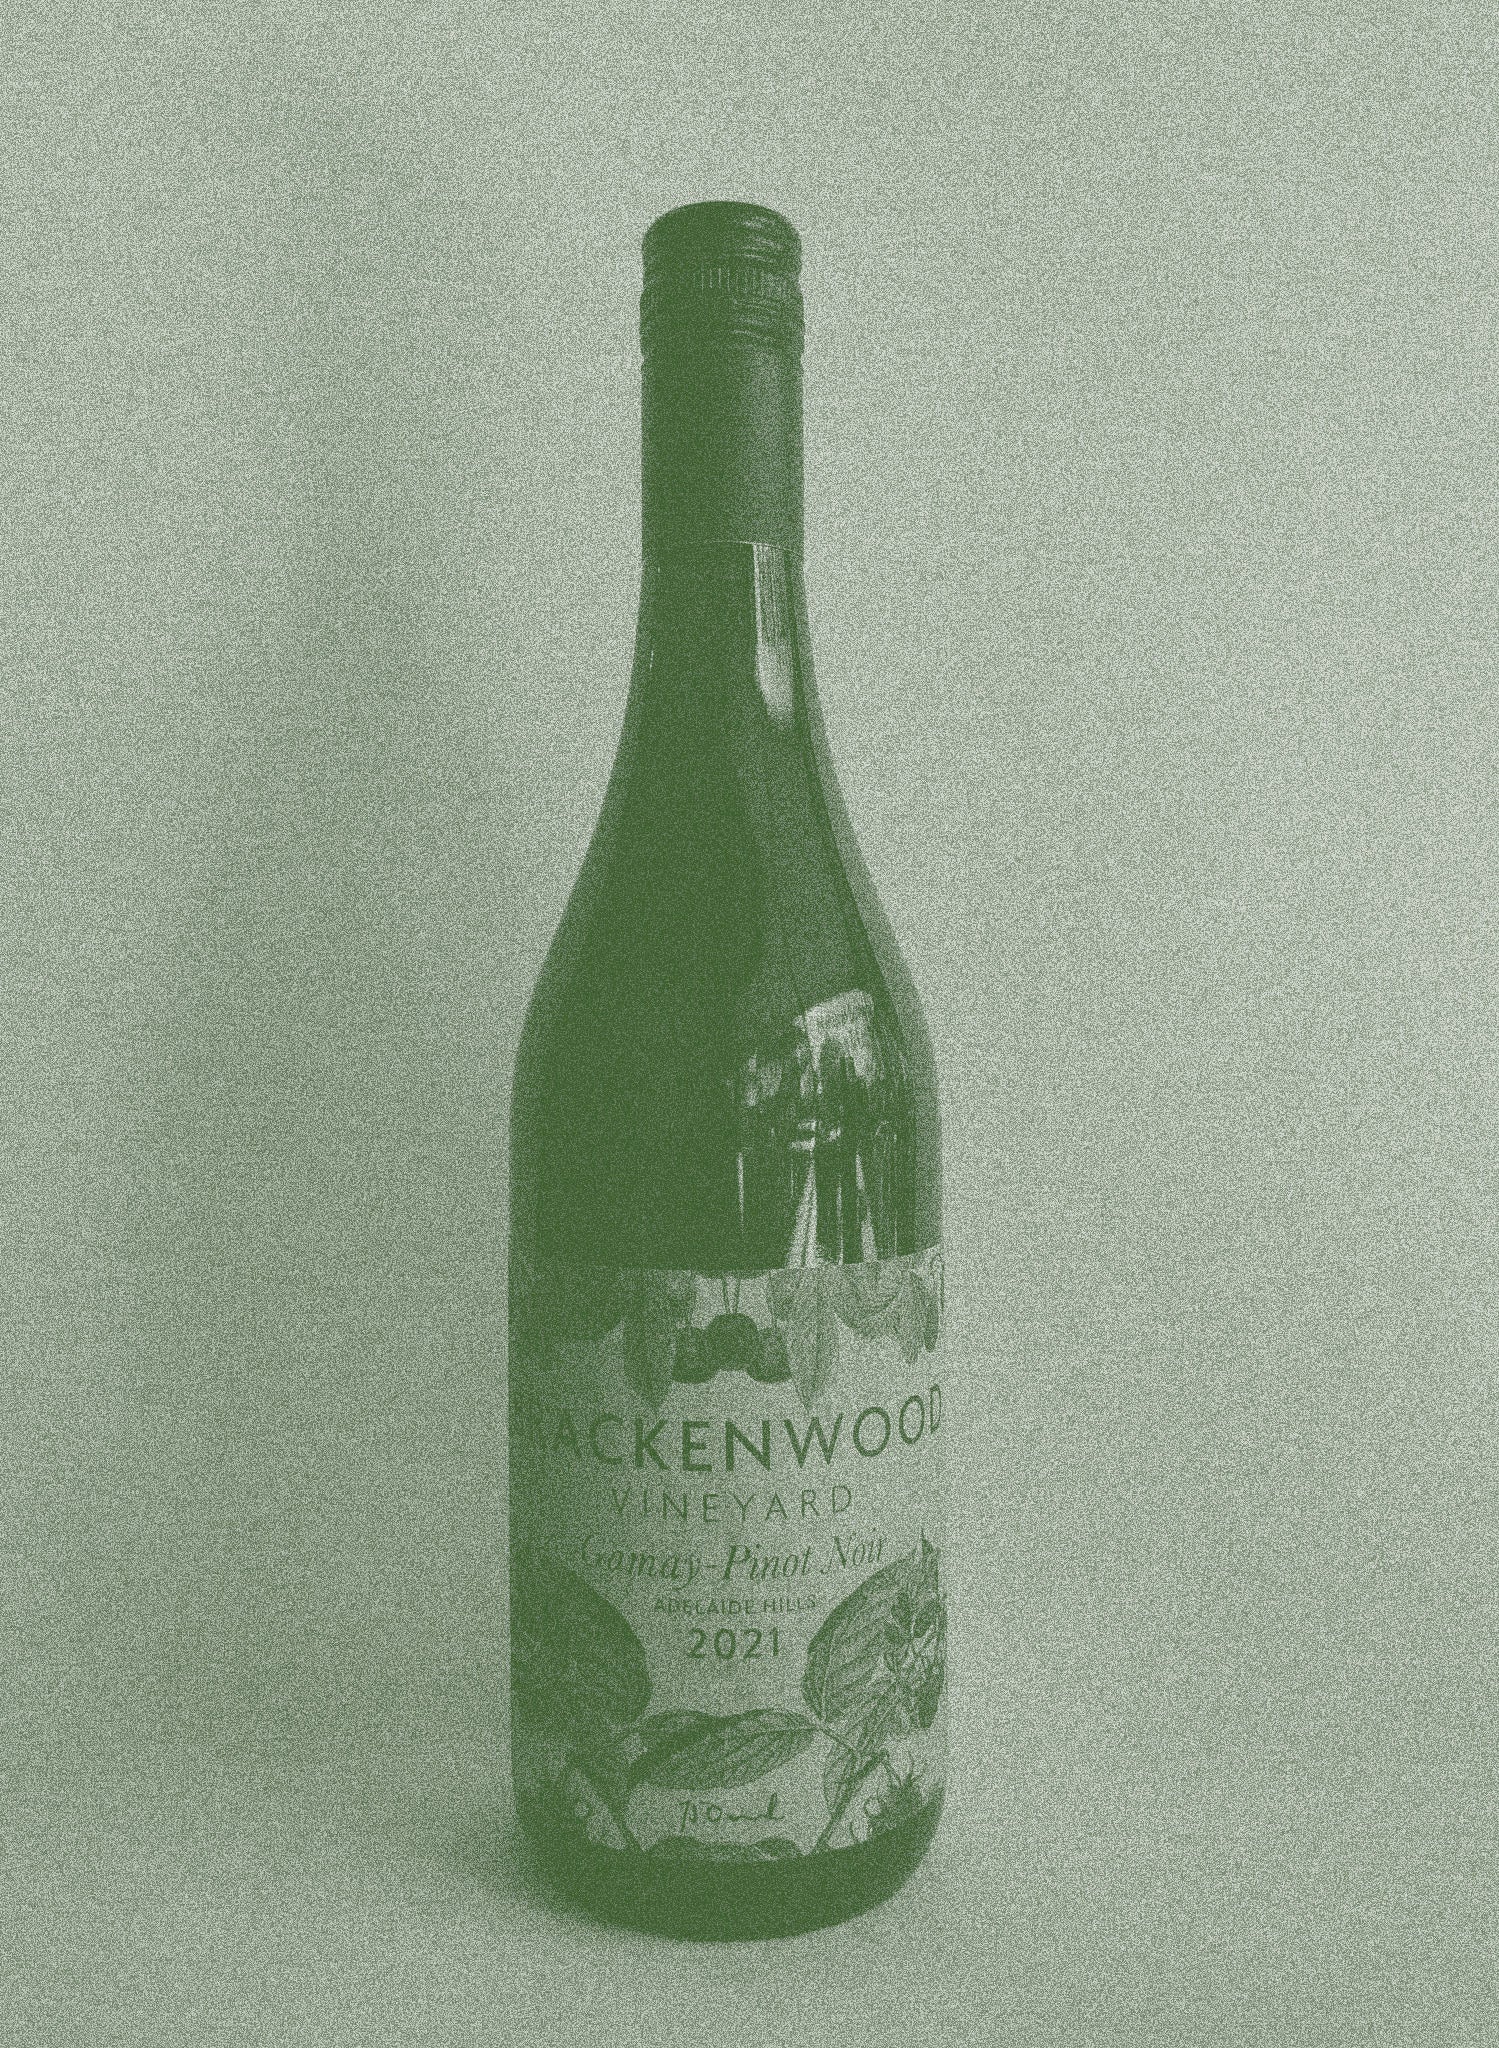 Brackenwood Gamay/Pinot Noir